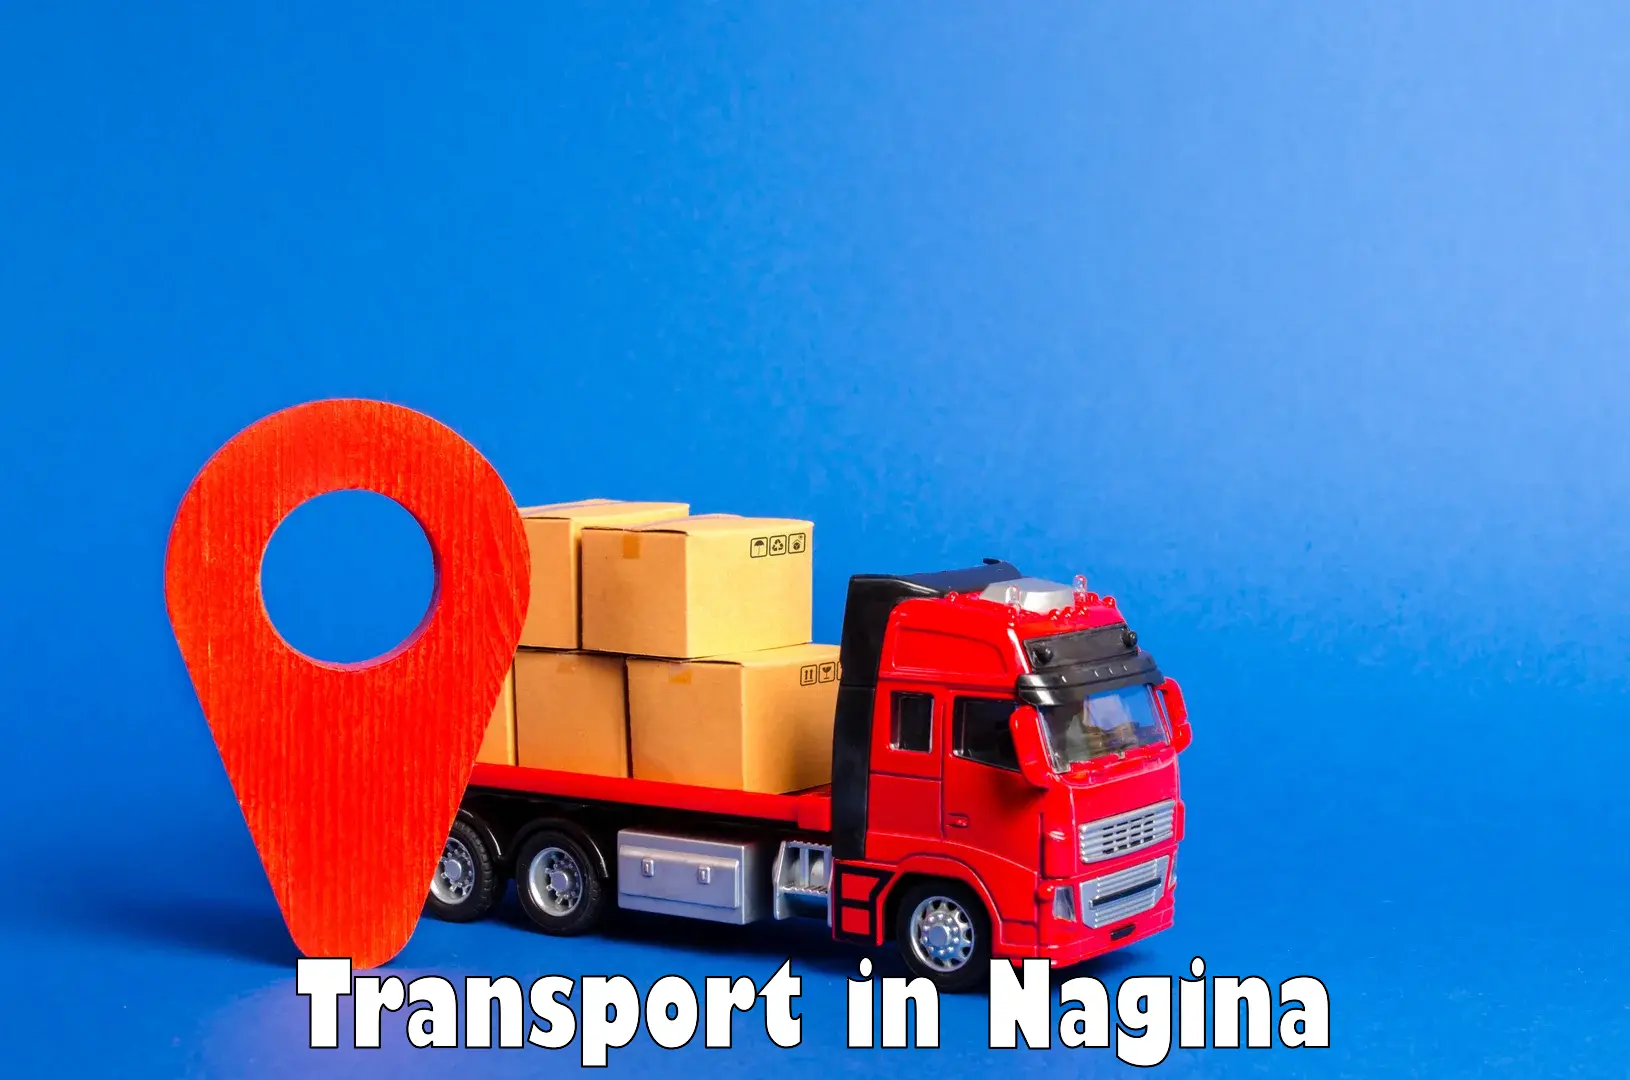 Goods delivery service in Nagina